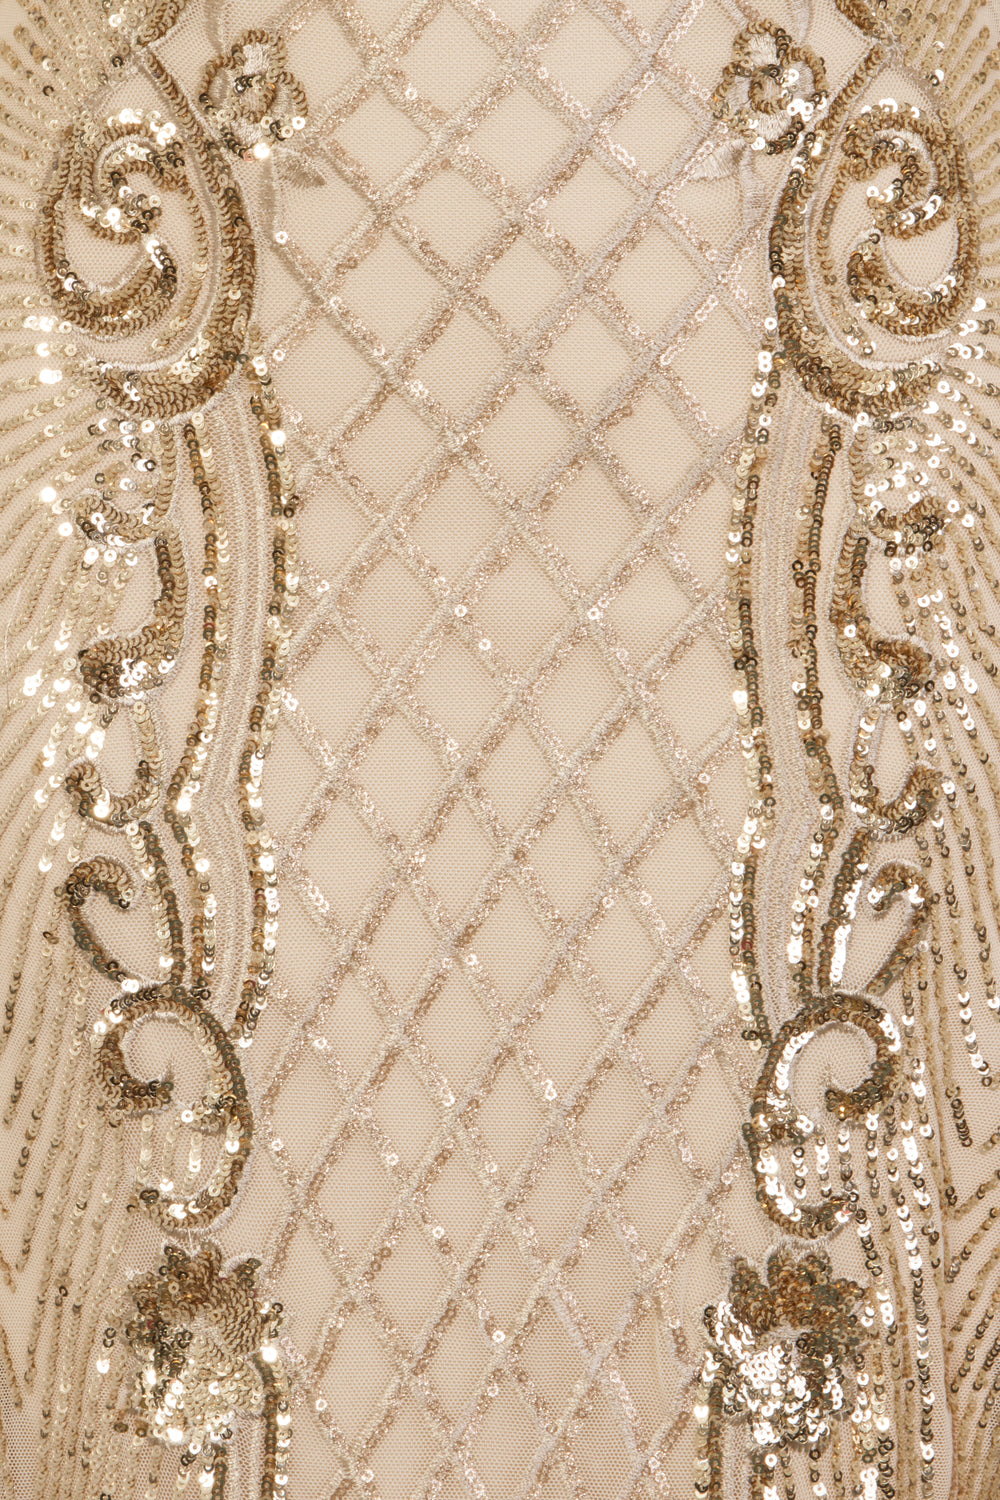 Royalty Vip Nude Gold Sequin & Embroidery Bardot Fishtail Mermaid Dress